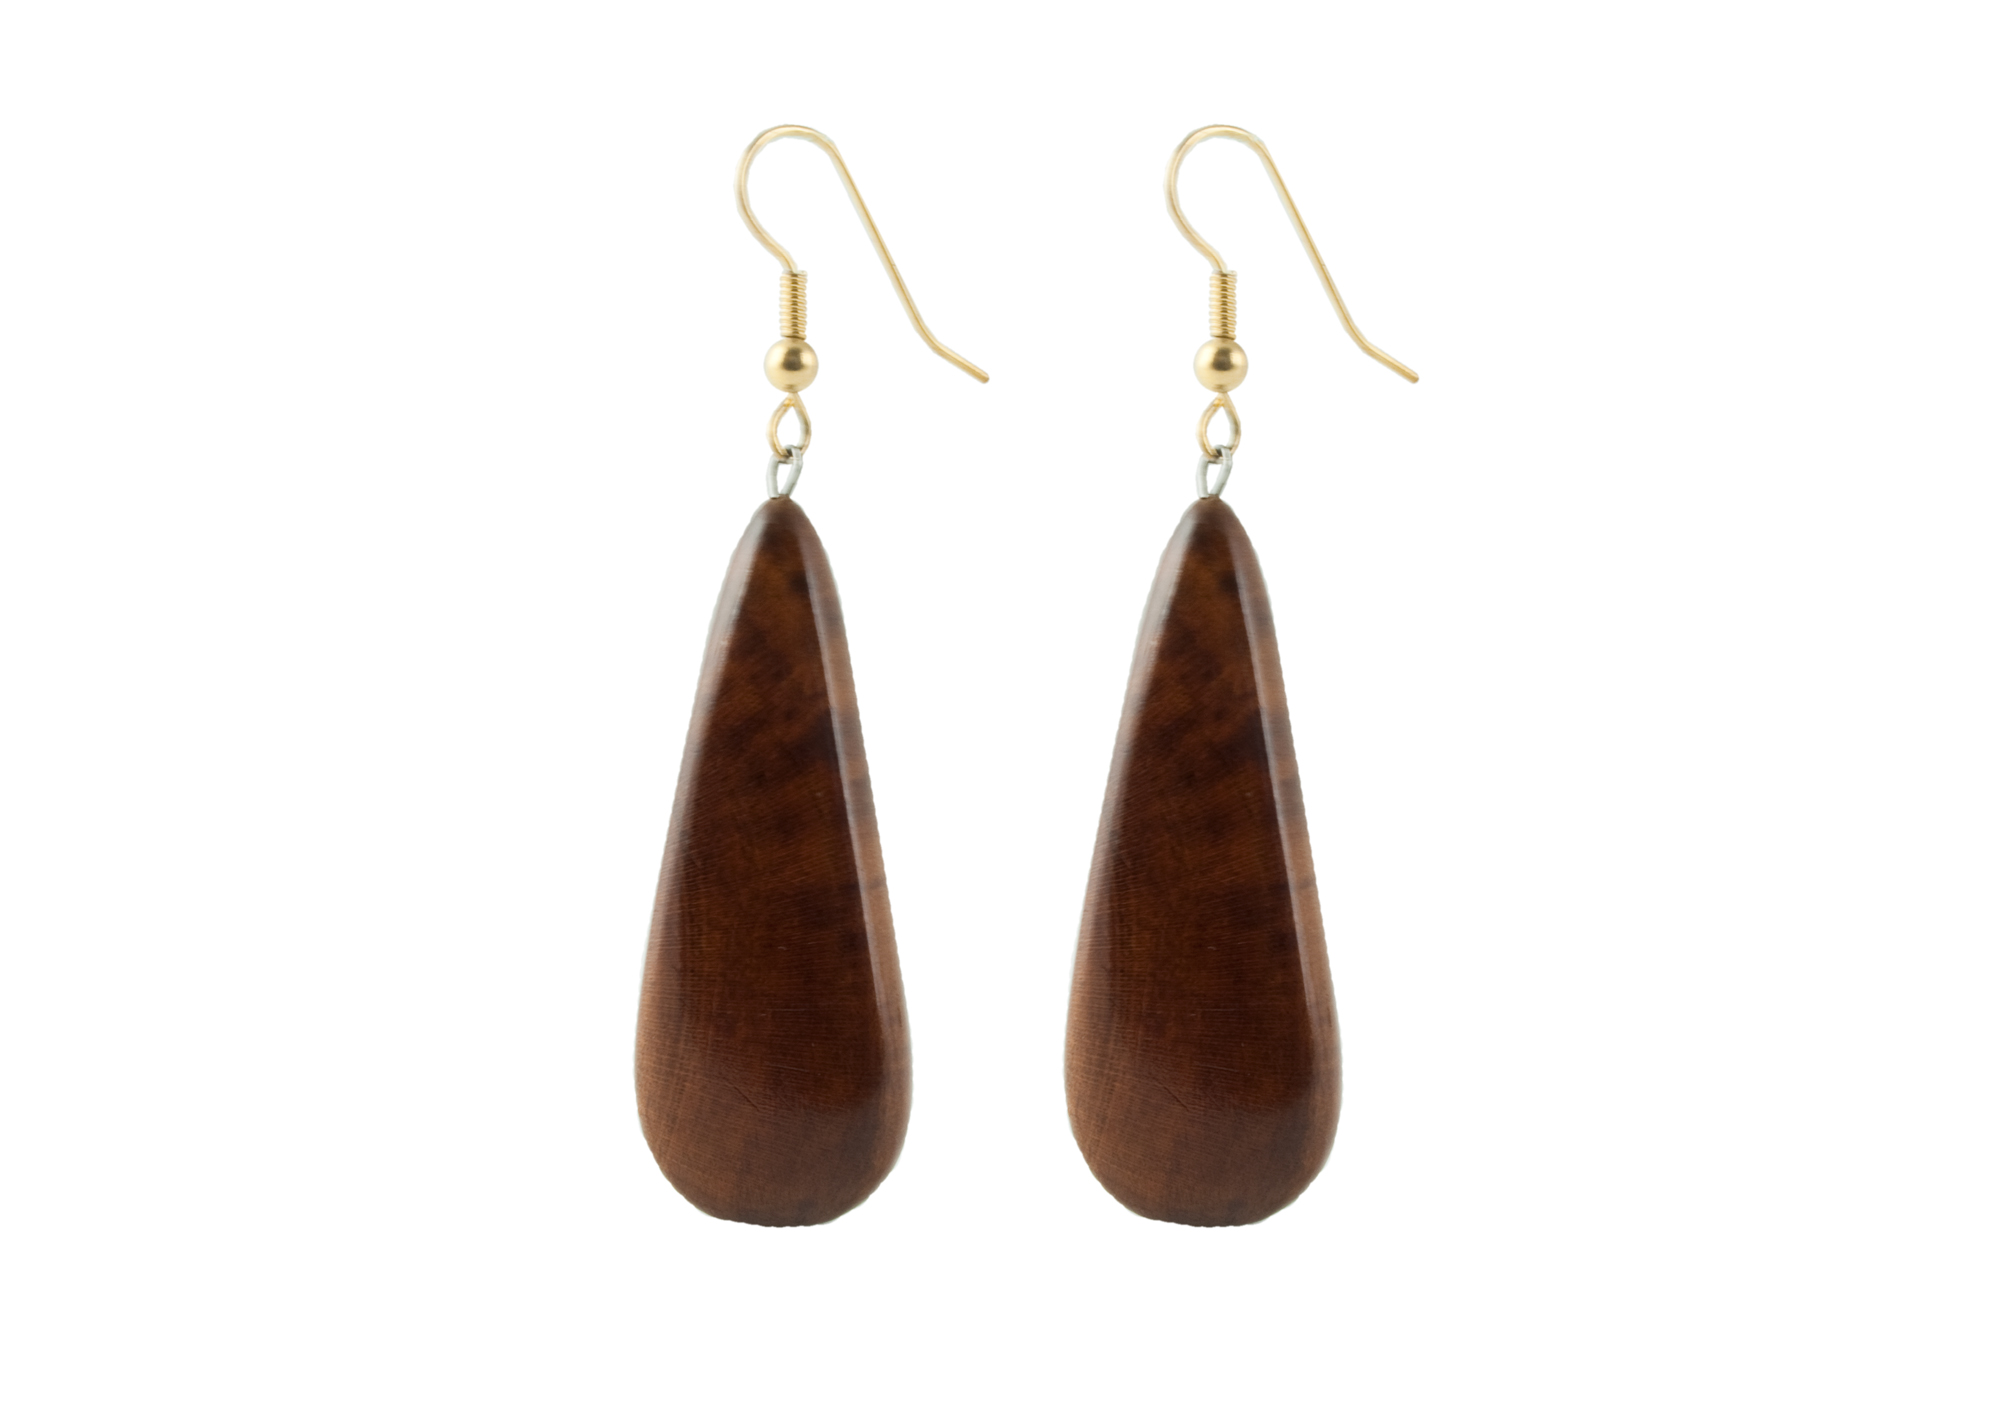 Buy Teardrop Black Sea Earrings at GoldenCockerel.com